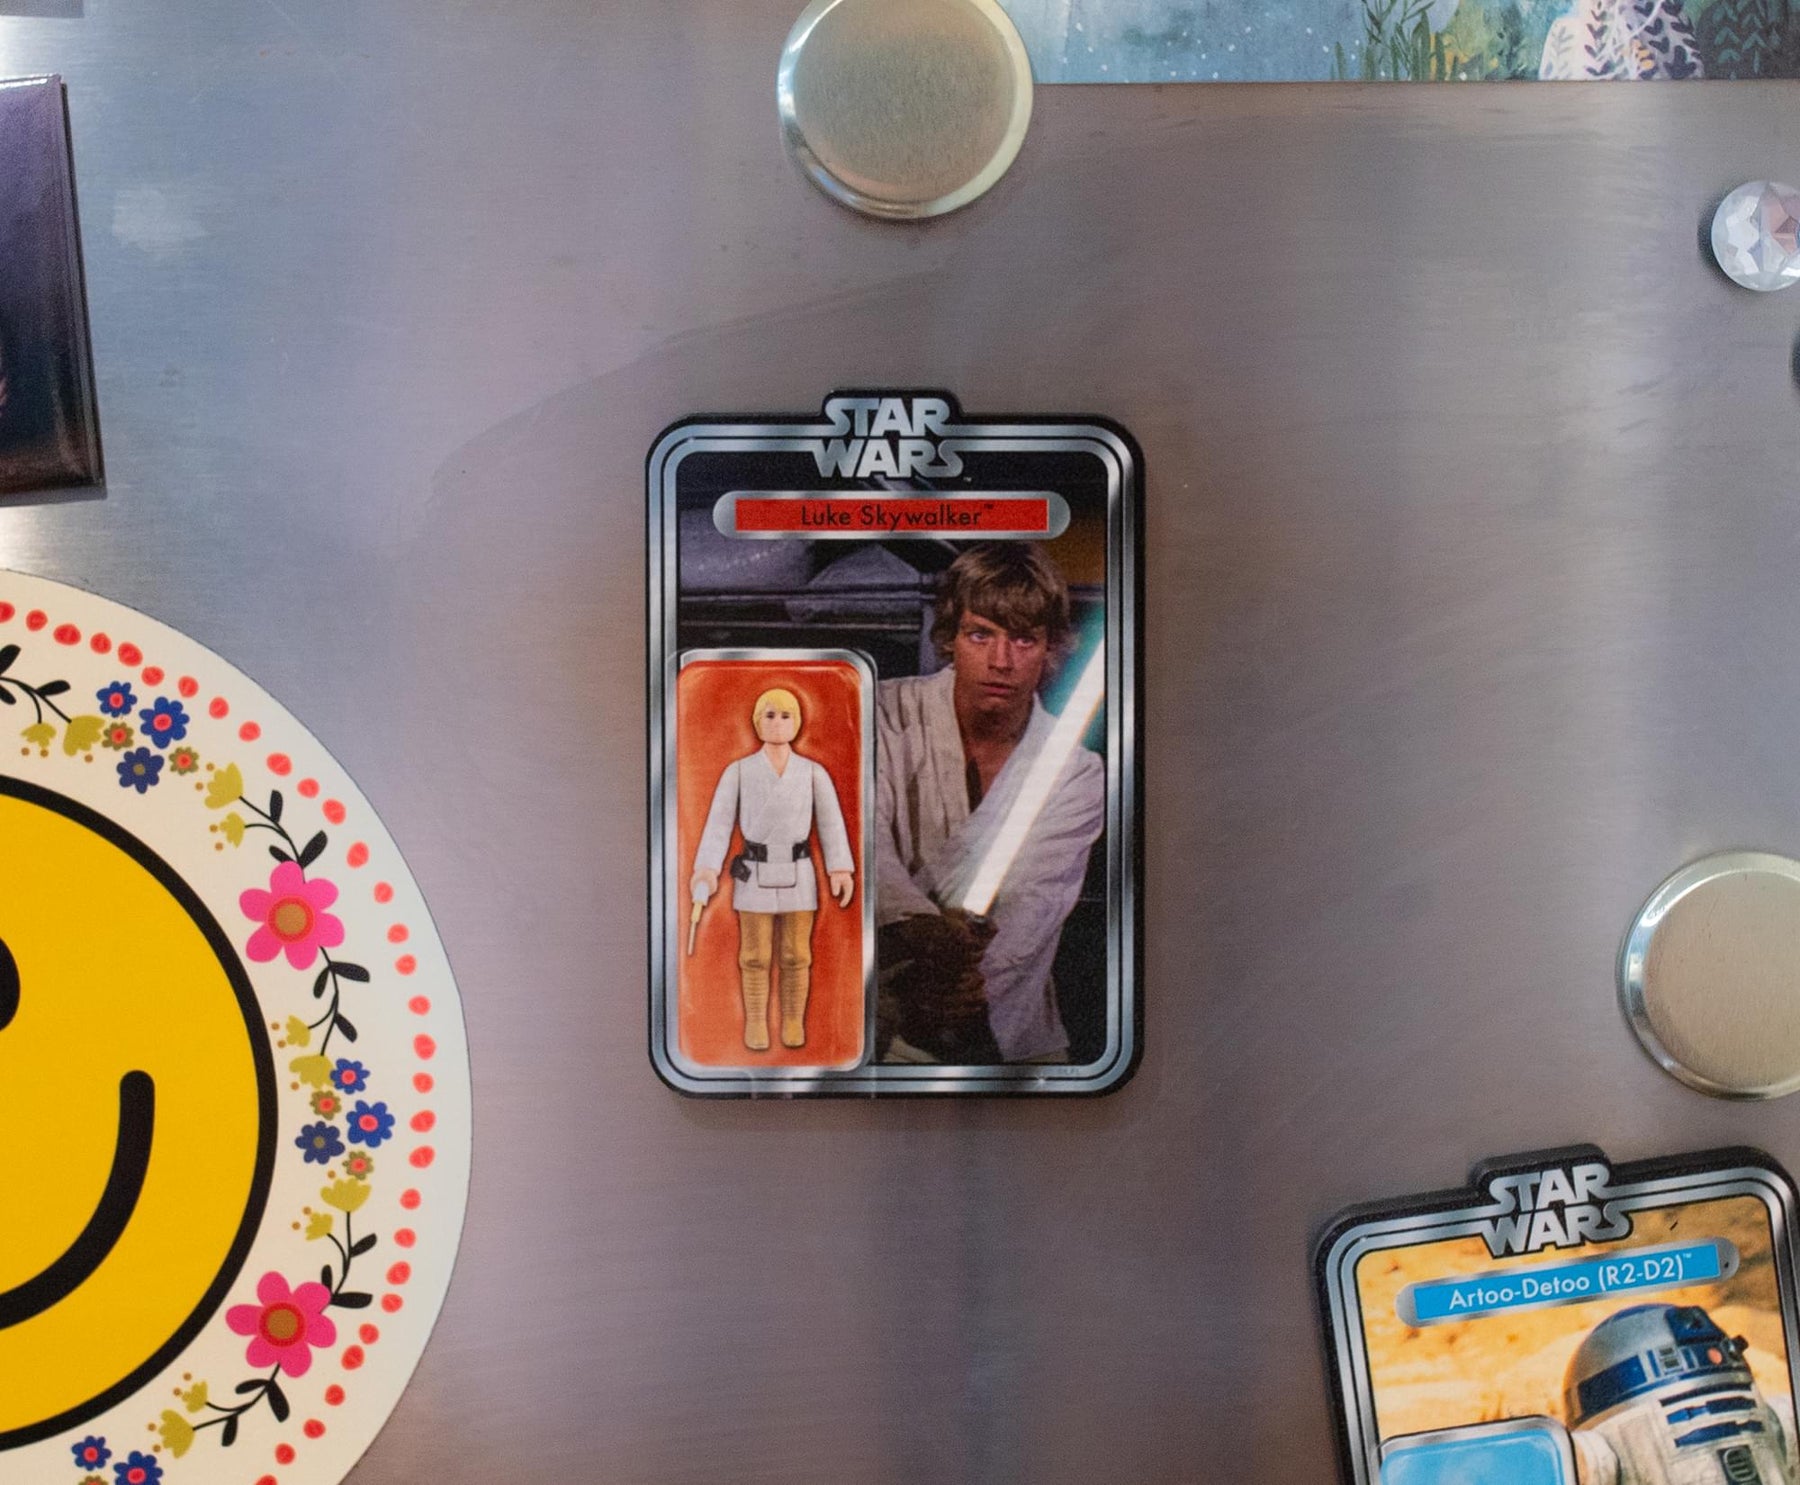 Star Wars Luke Skywalker Action Figure Funky Chunky Magnet | Toynk Exclusive